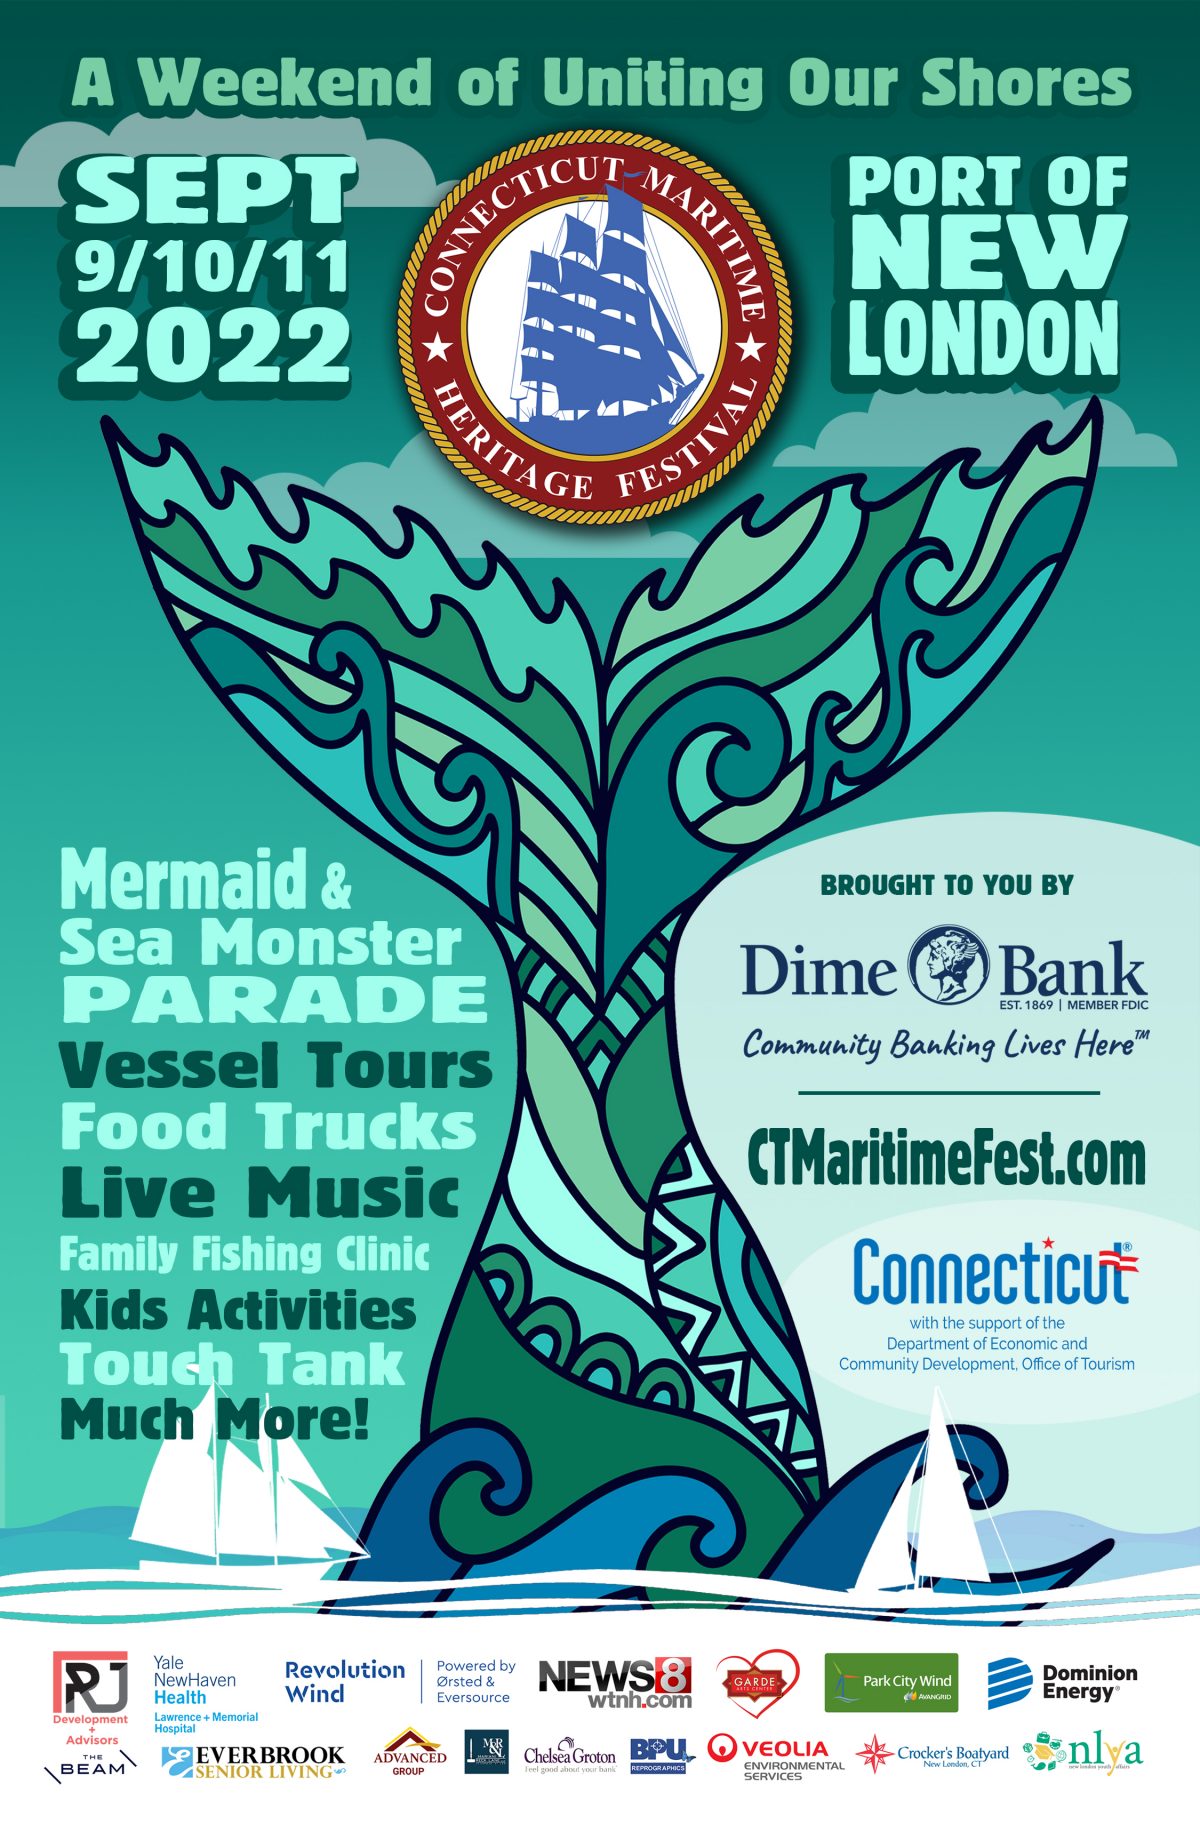 CT Maritime Heritage Festival Visit New London